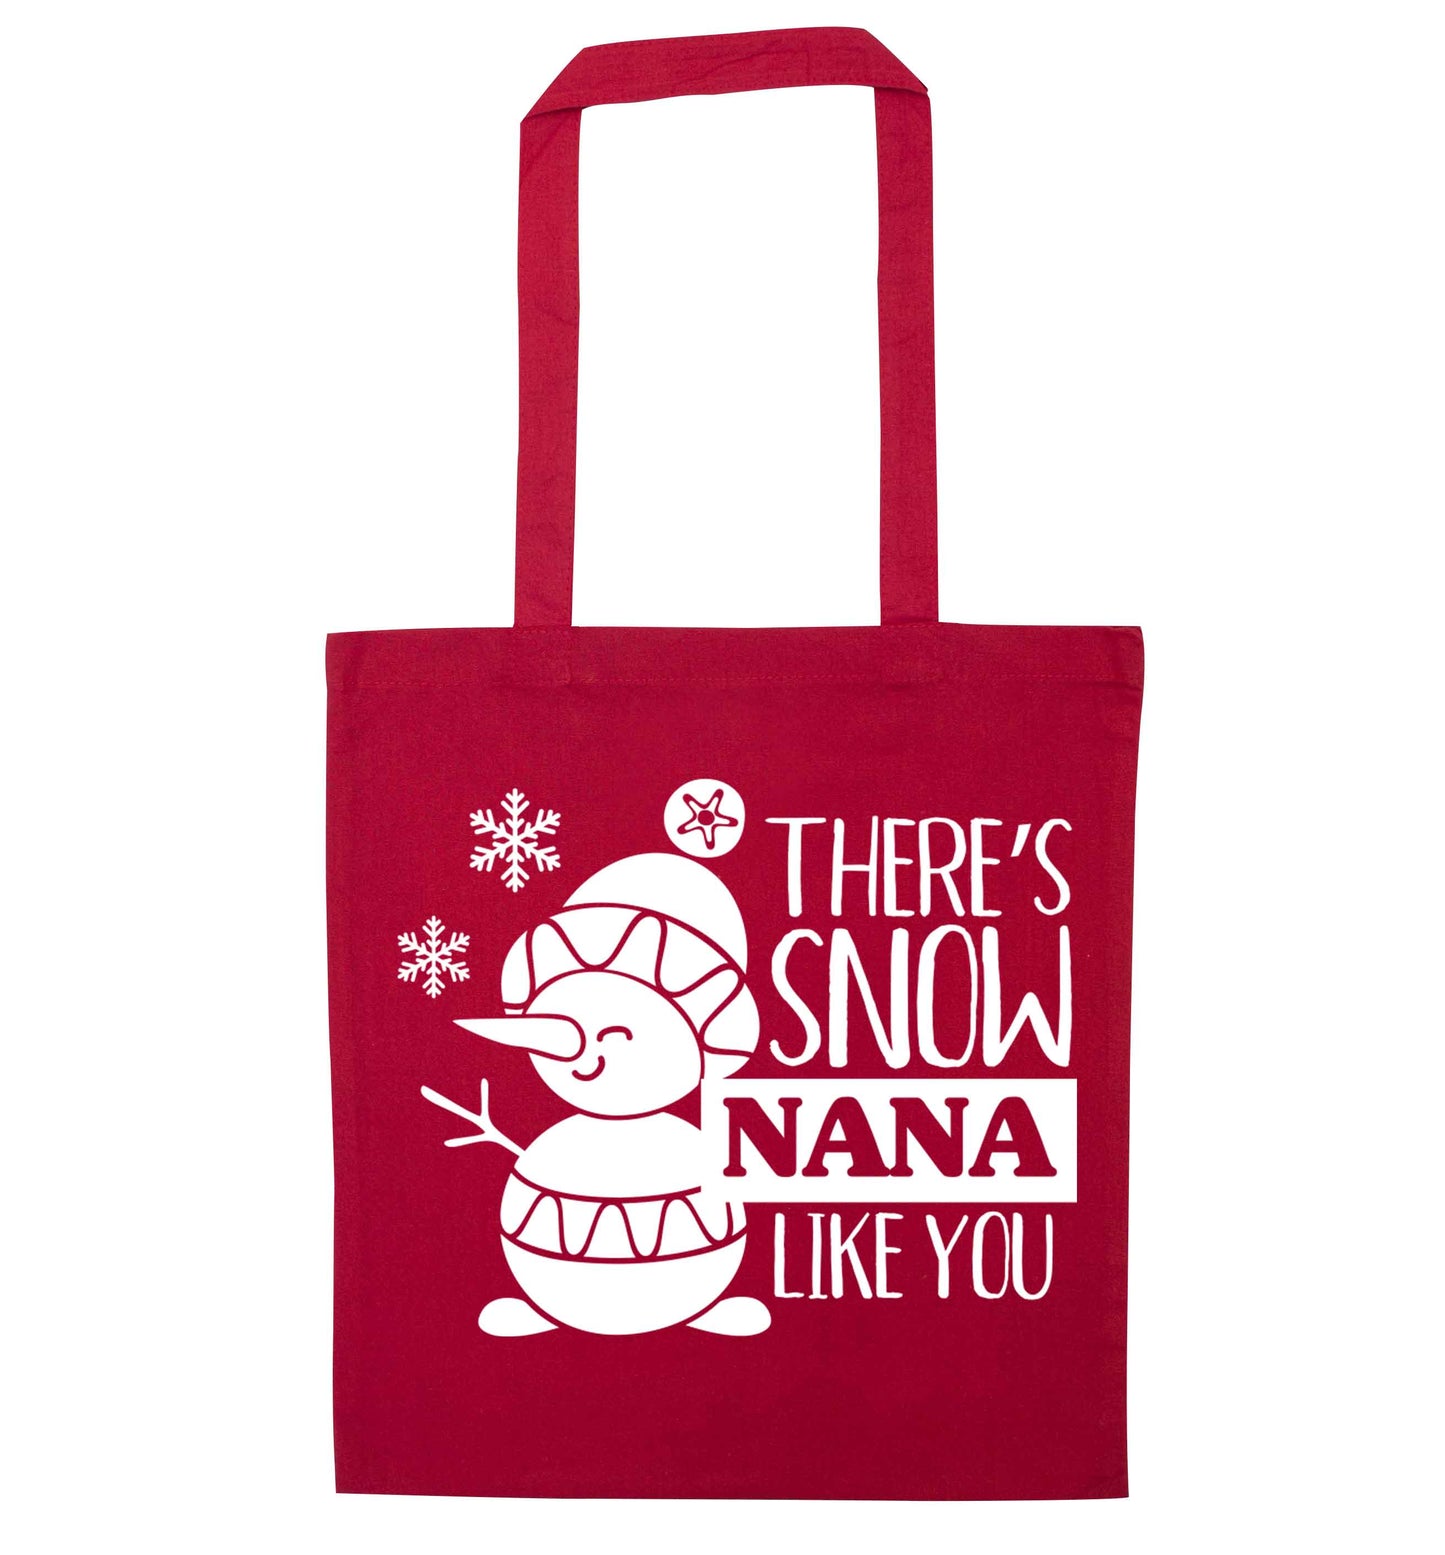 There's snow nana like you red tote bag